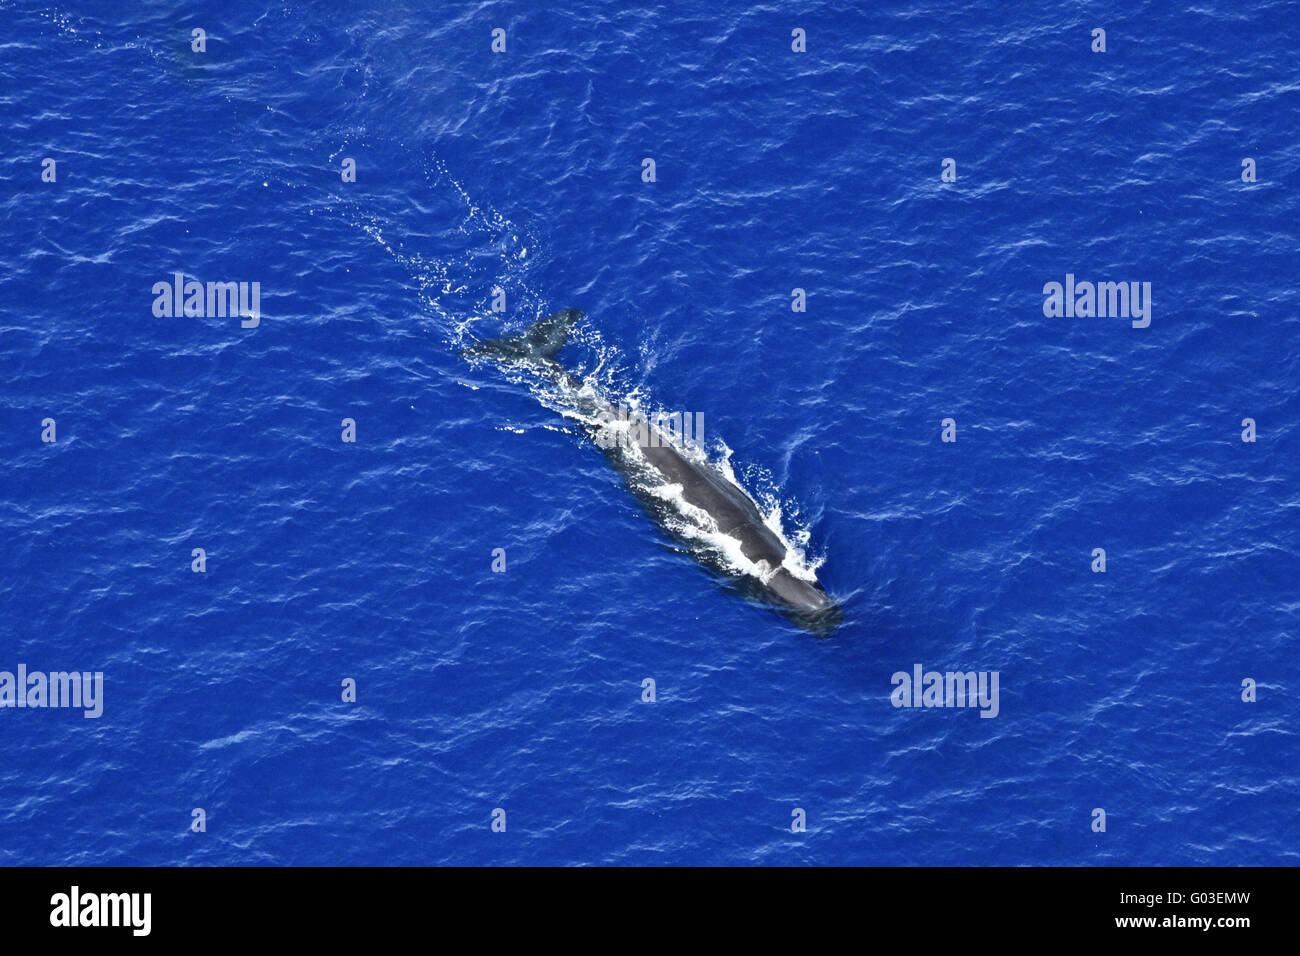 La balena, Balena Blu, Fotografia aerea Foto Stock